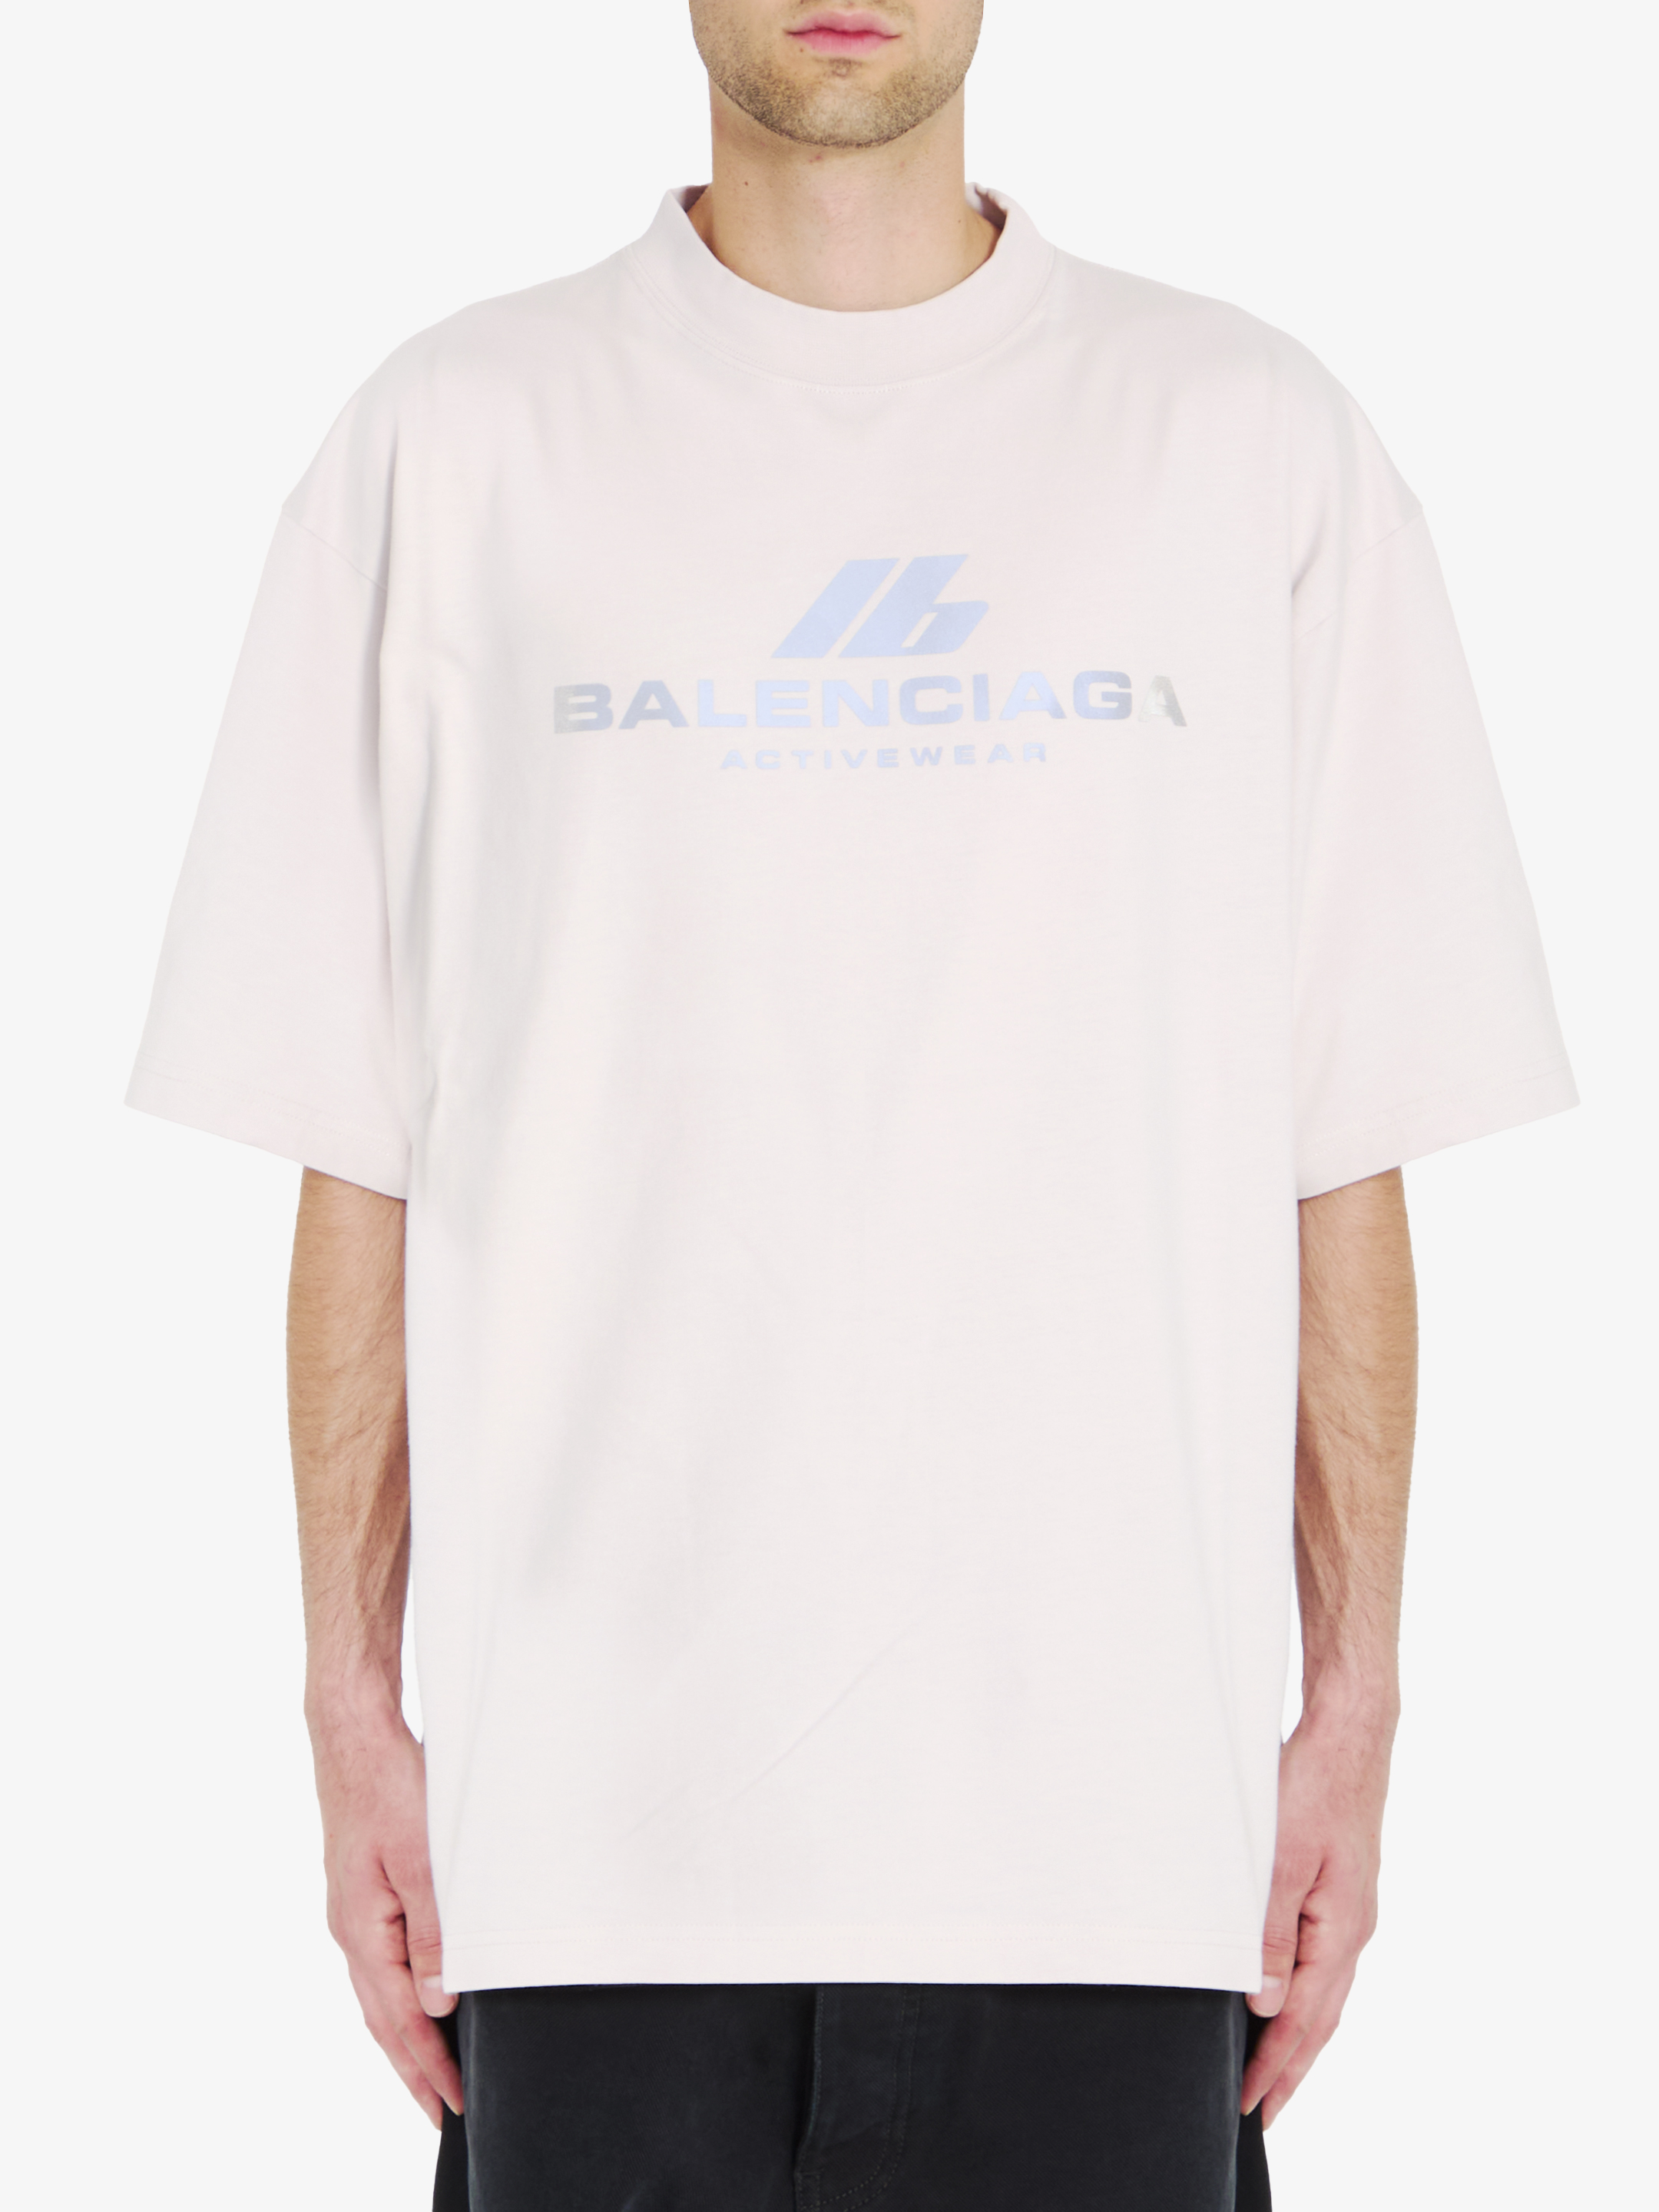 Balenciaga Activewear Tshirt In White